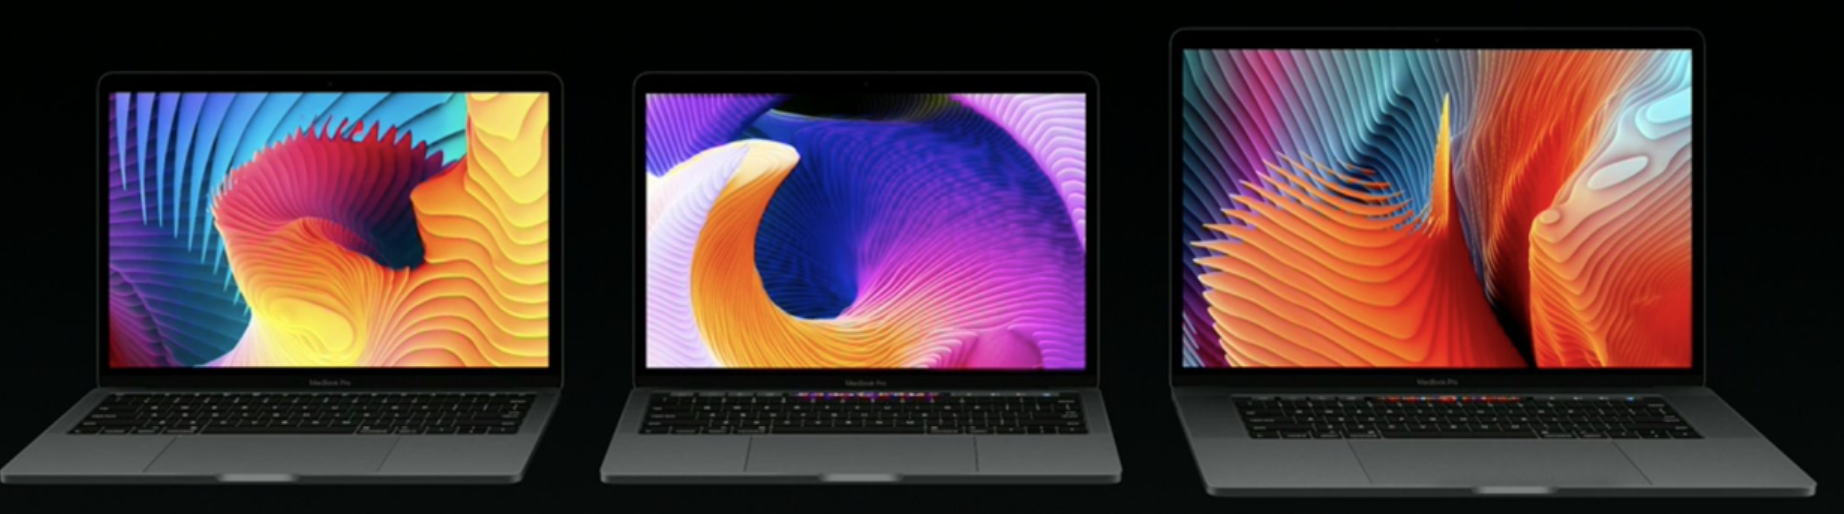 macbook pro wallpaper,laptop,screen,output device,technology,electronic device